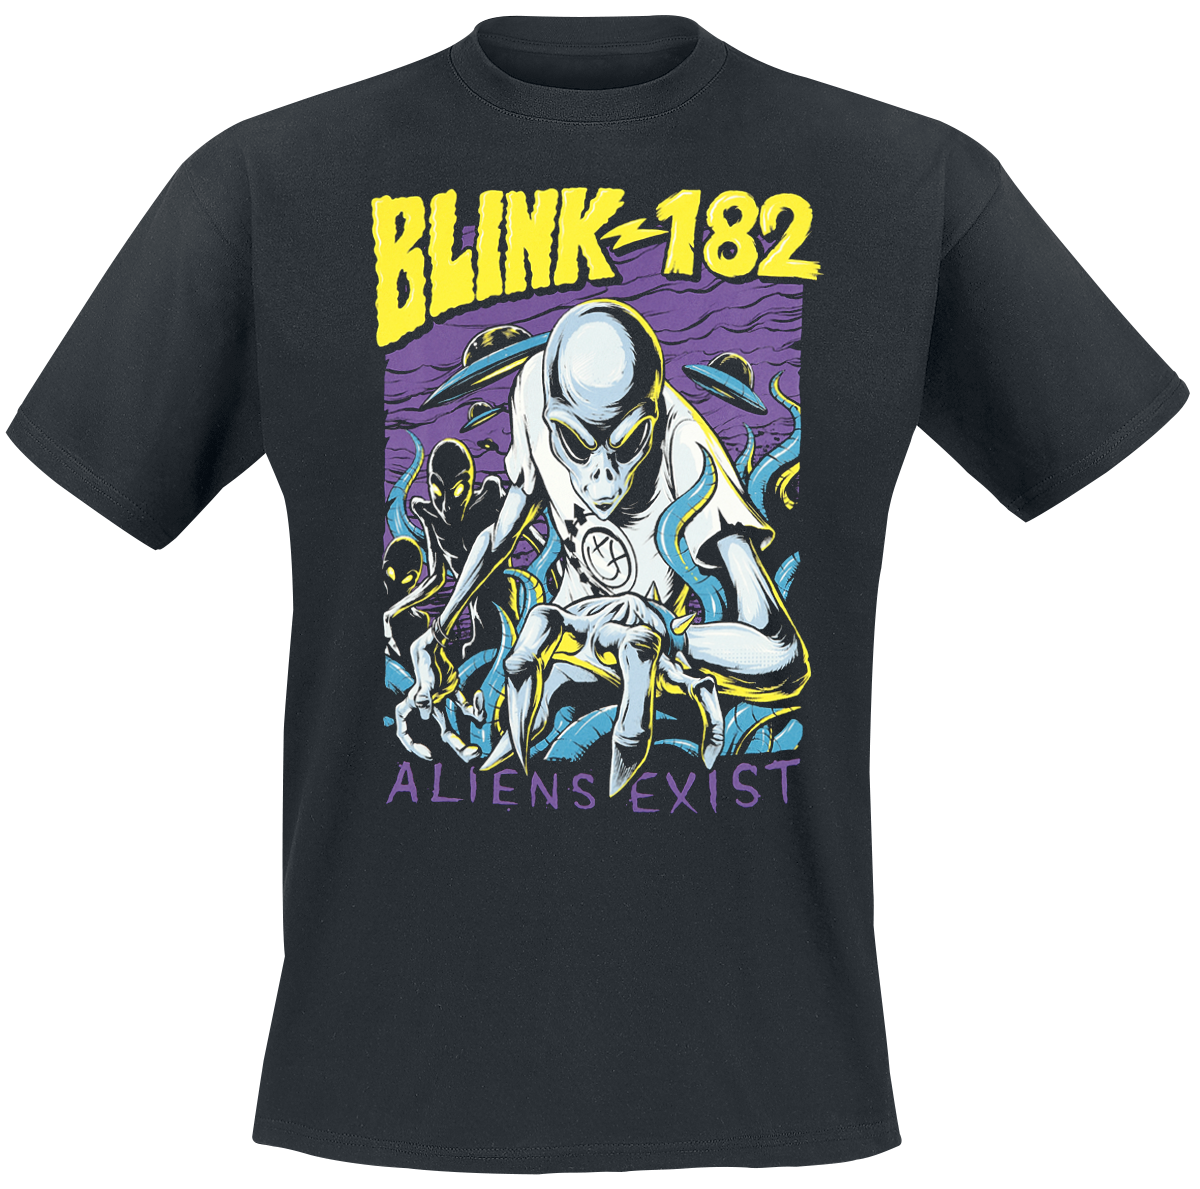 Blink-182 - Aliens Exist - T-Shirt - schwarz